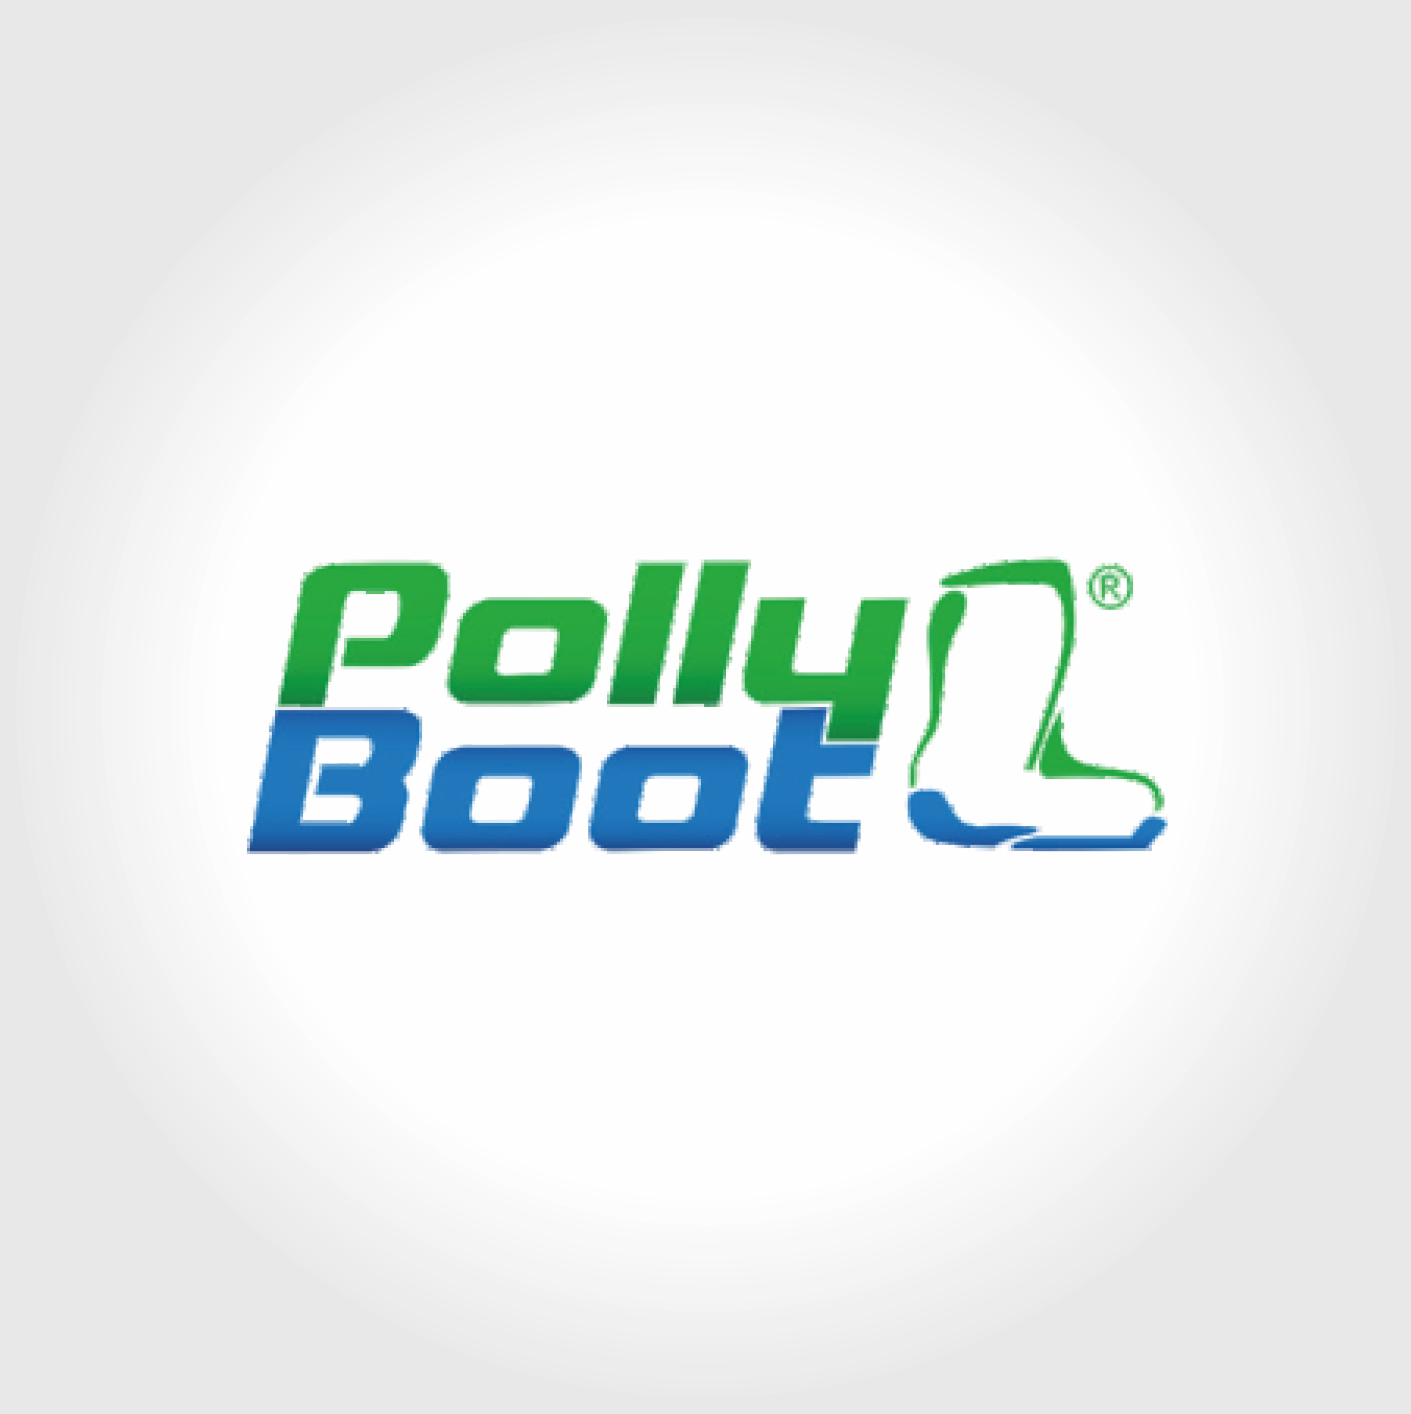 Polly Boot